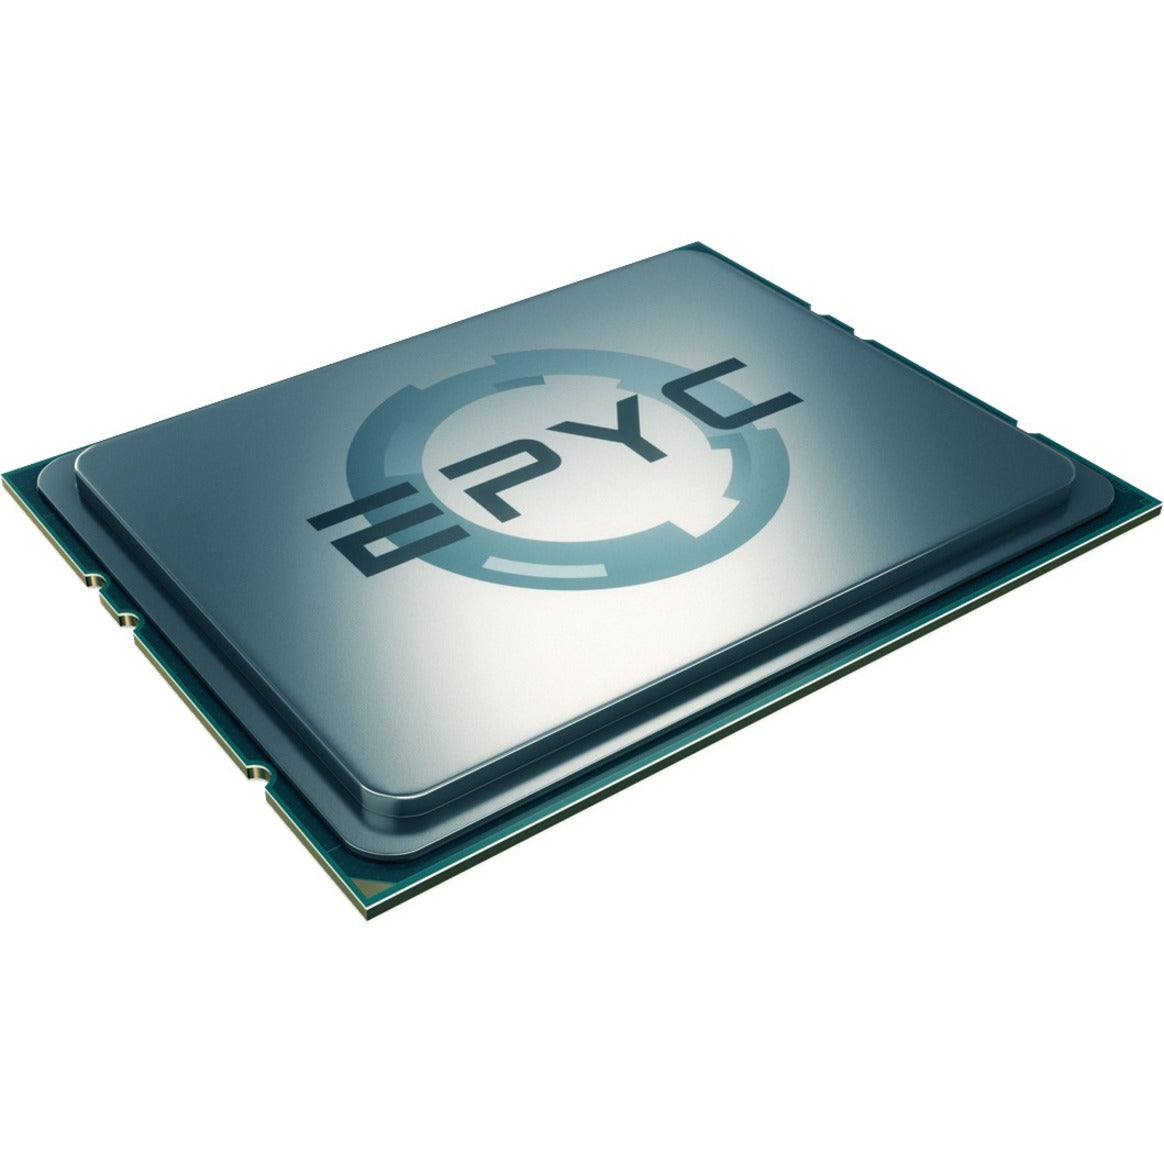 AMD EPYC Dotriaconta-core 7551P 2GHz Server Processor [Discontinued]